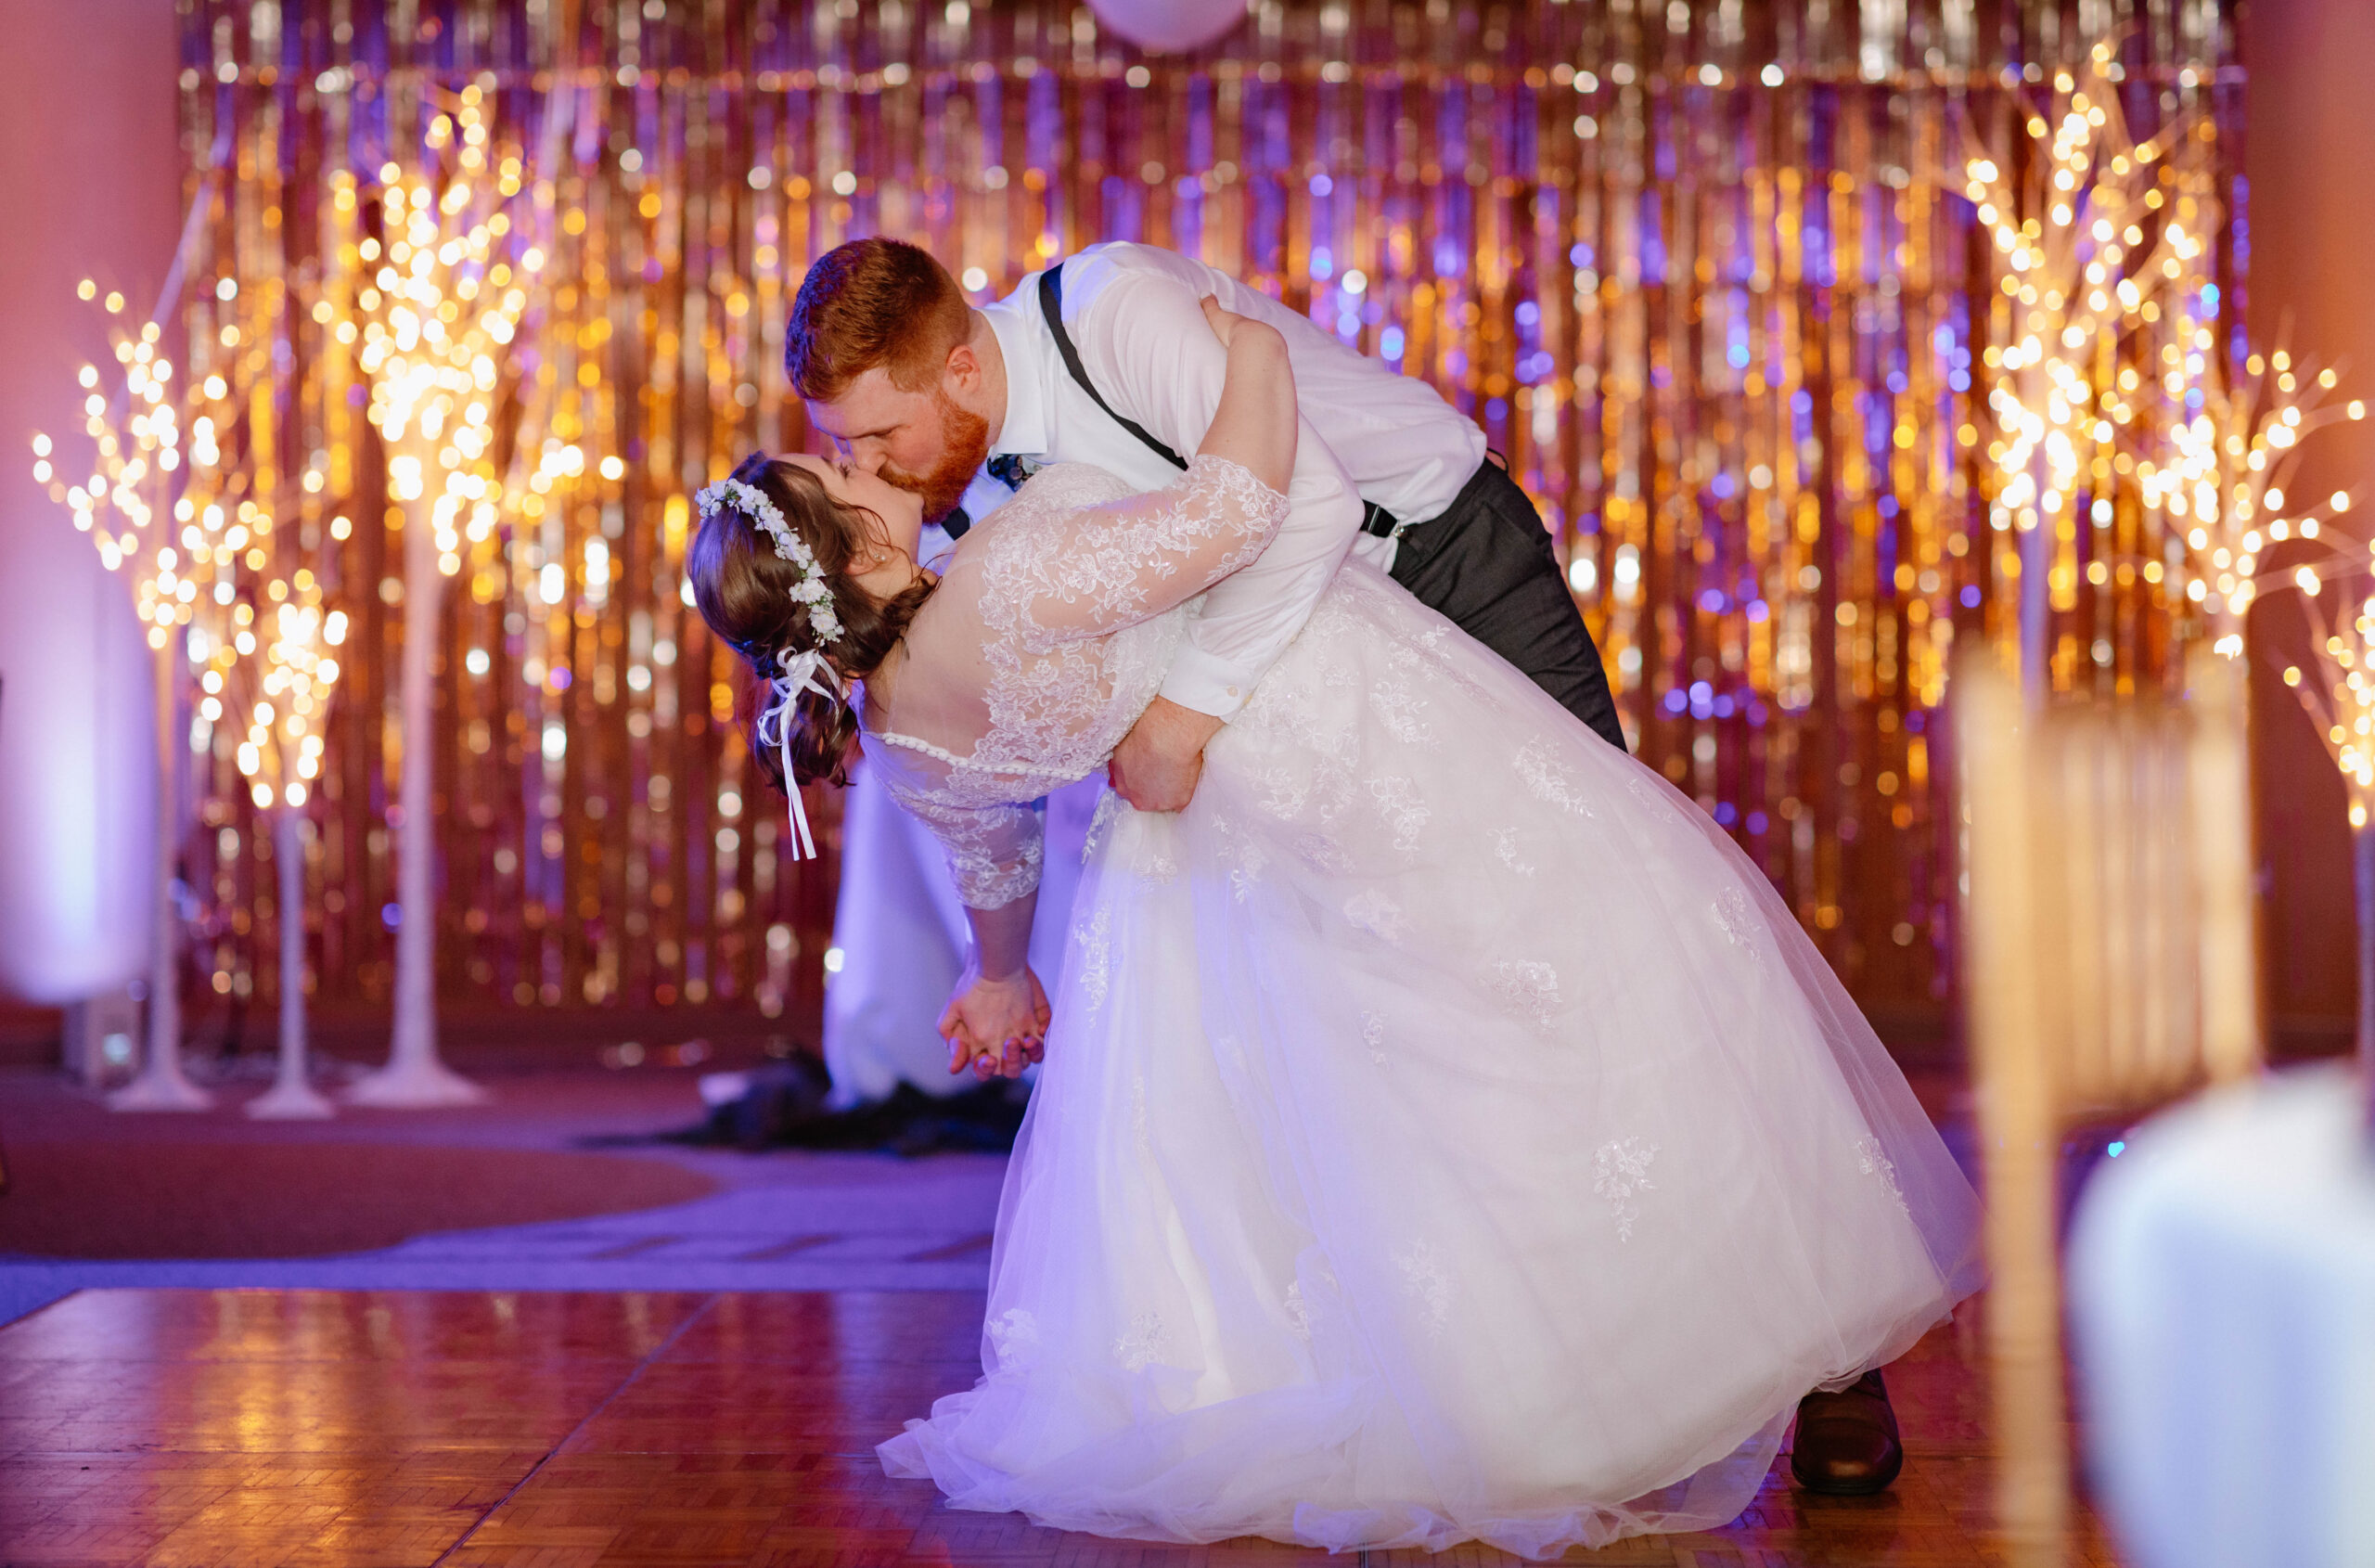 Groom dips bride on dance floor